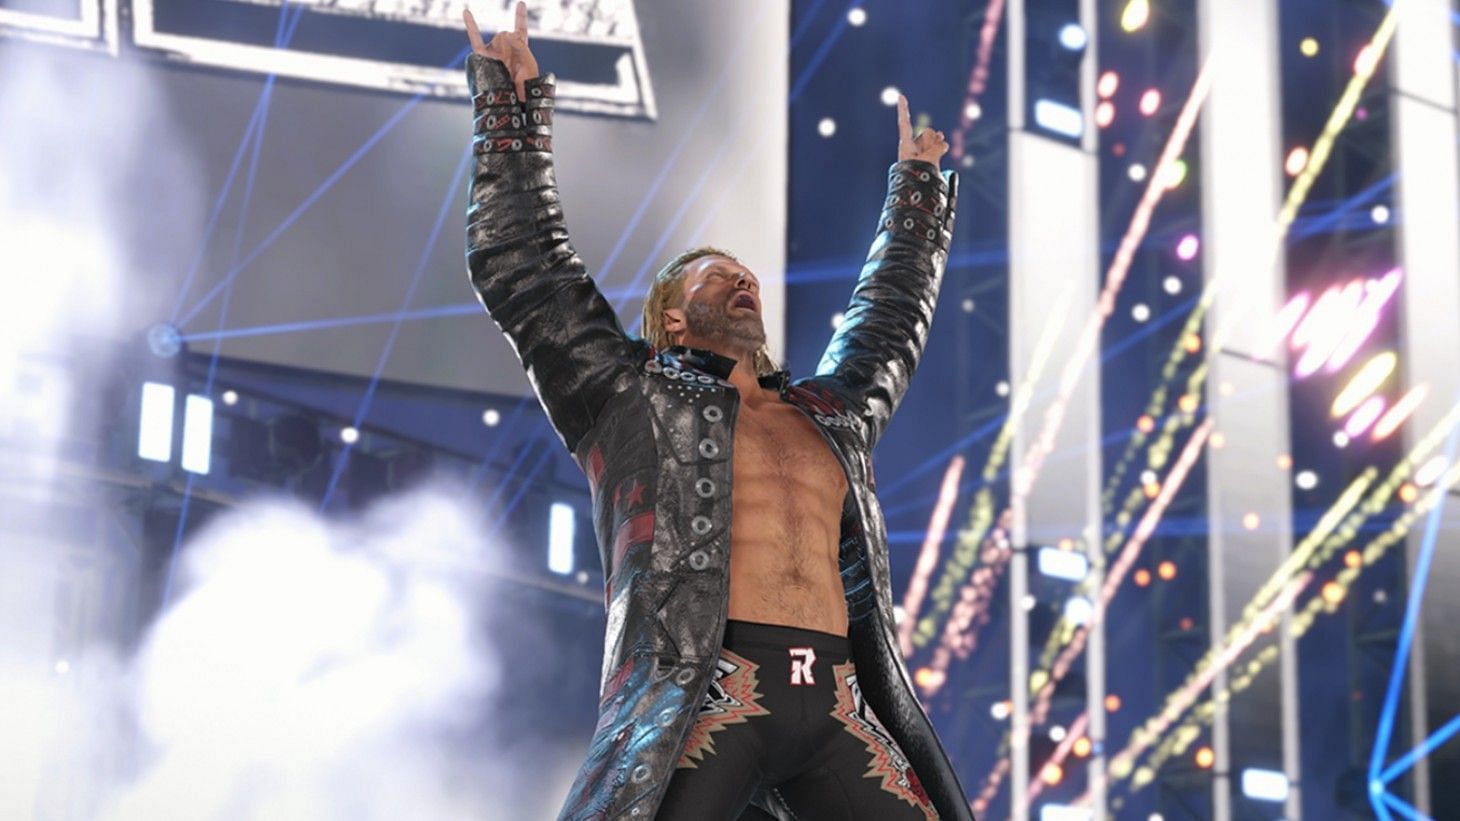 WWE Hall of Famer Edge in WWE 2K22